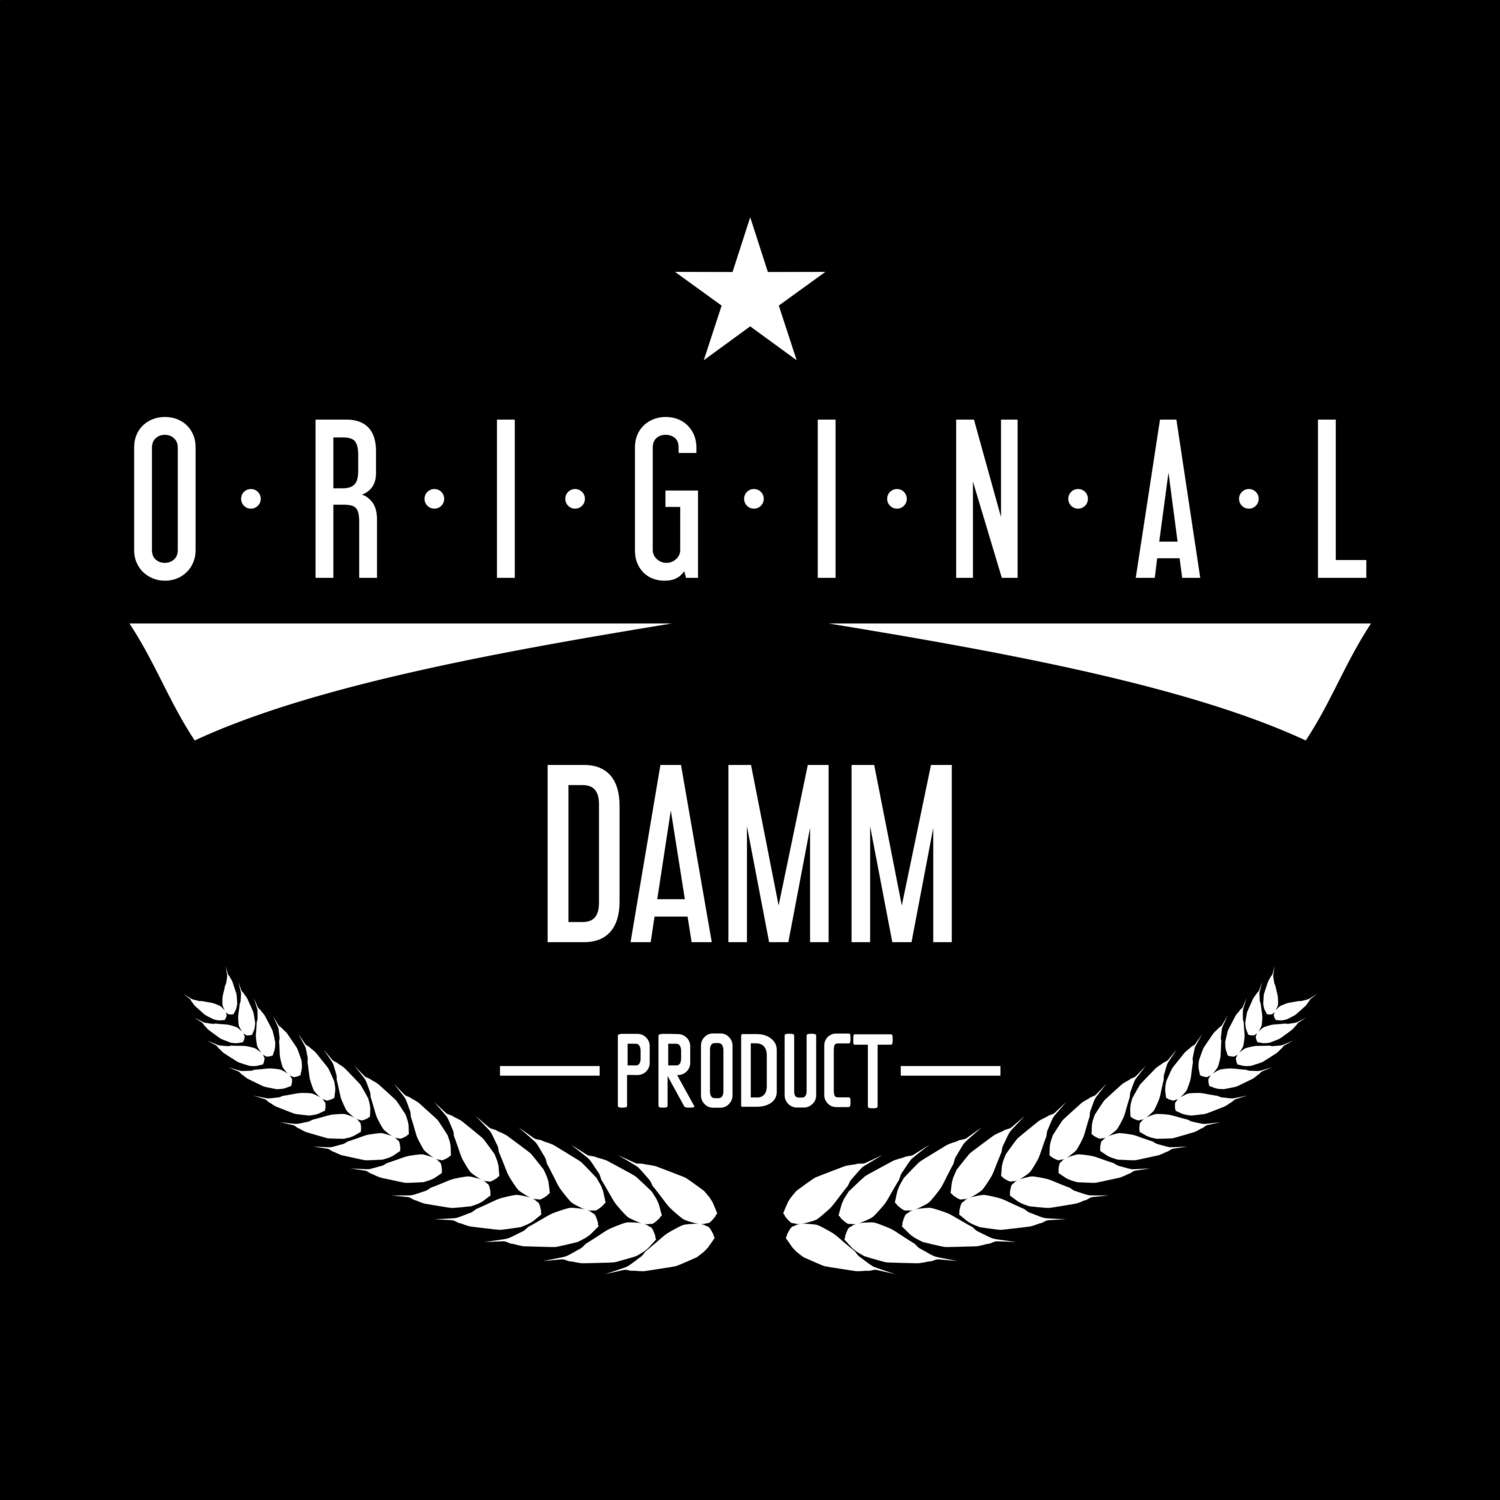 Damm T-Shirt »Original Product«